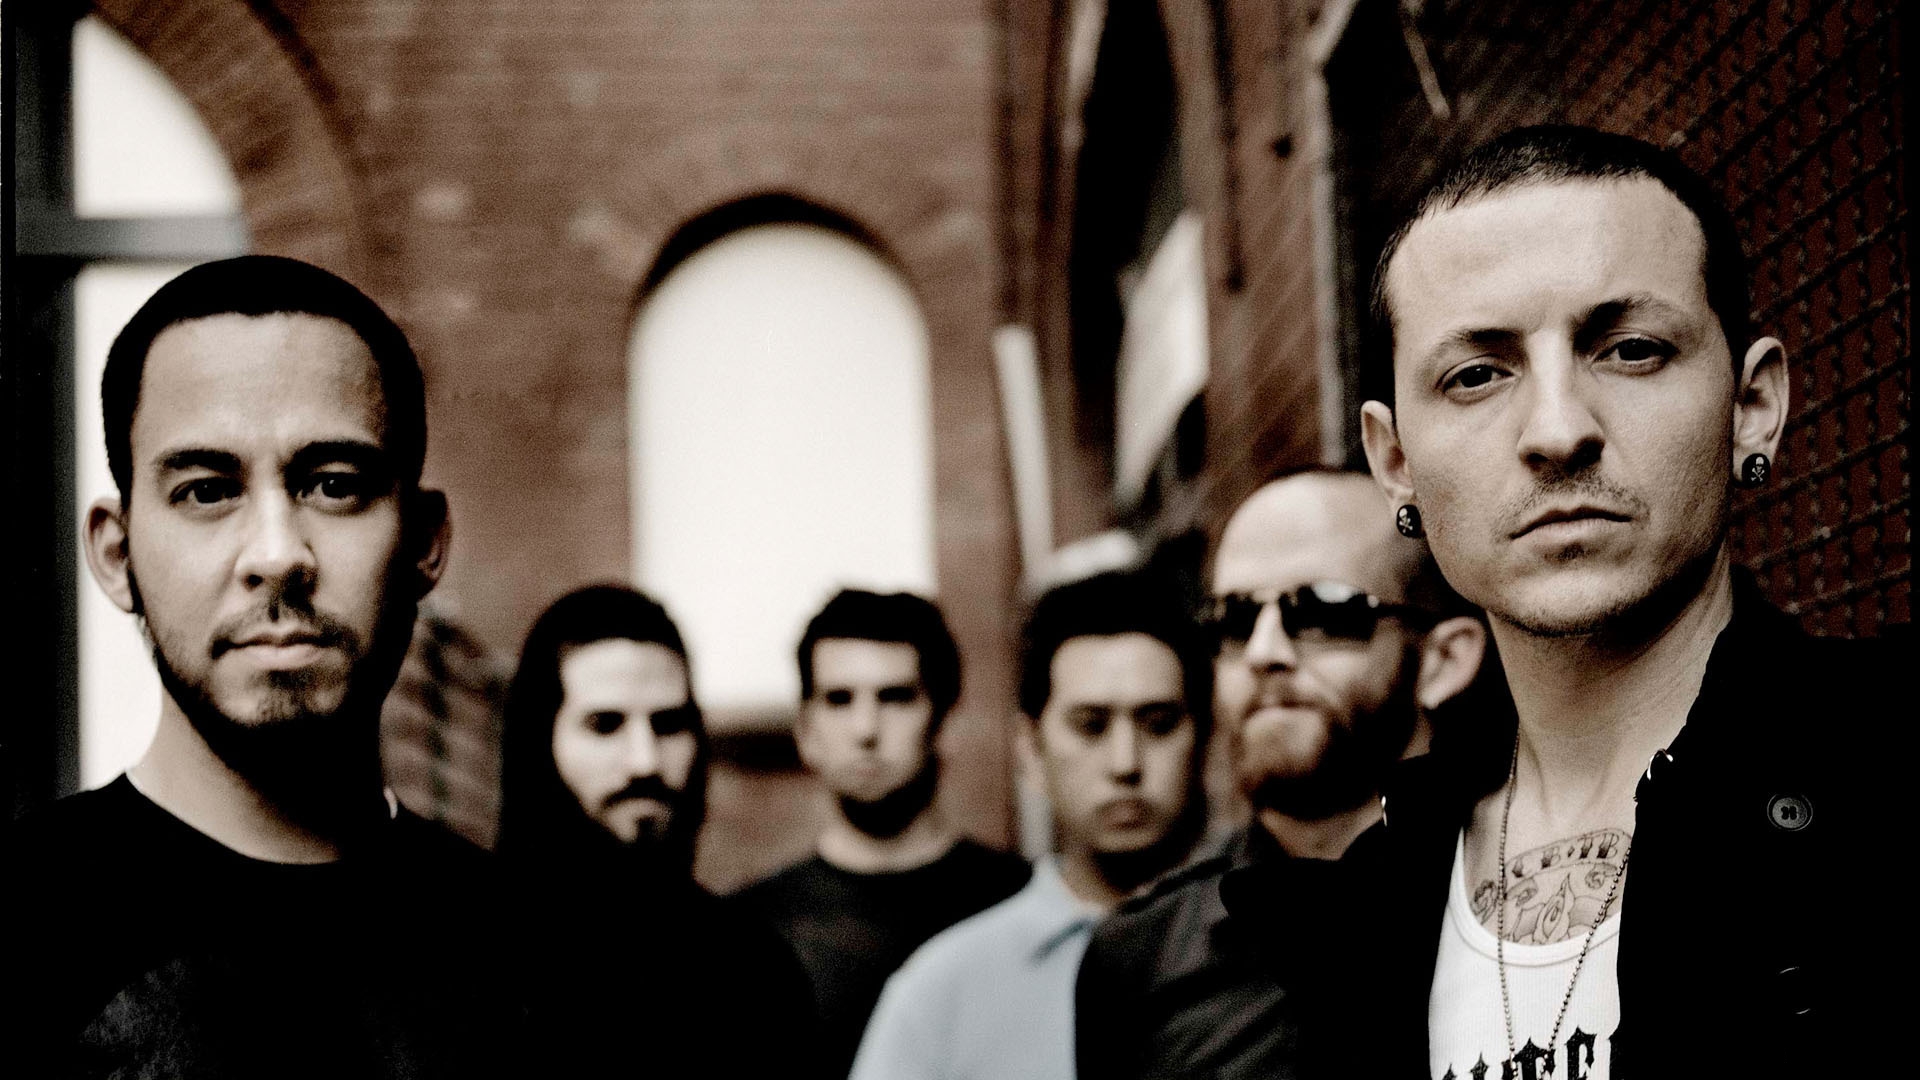 Music Linkin Park HD Wallpaper | Background Image